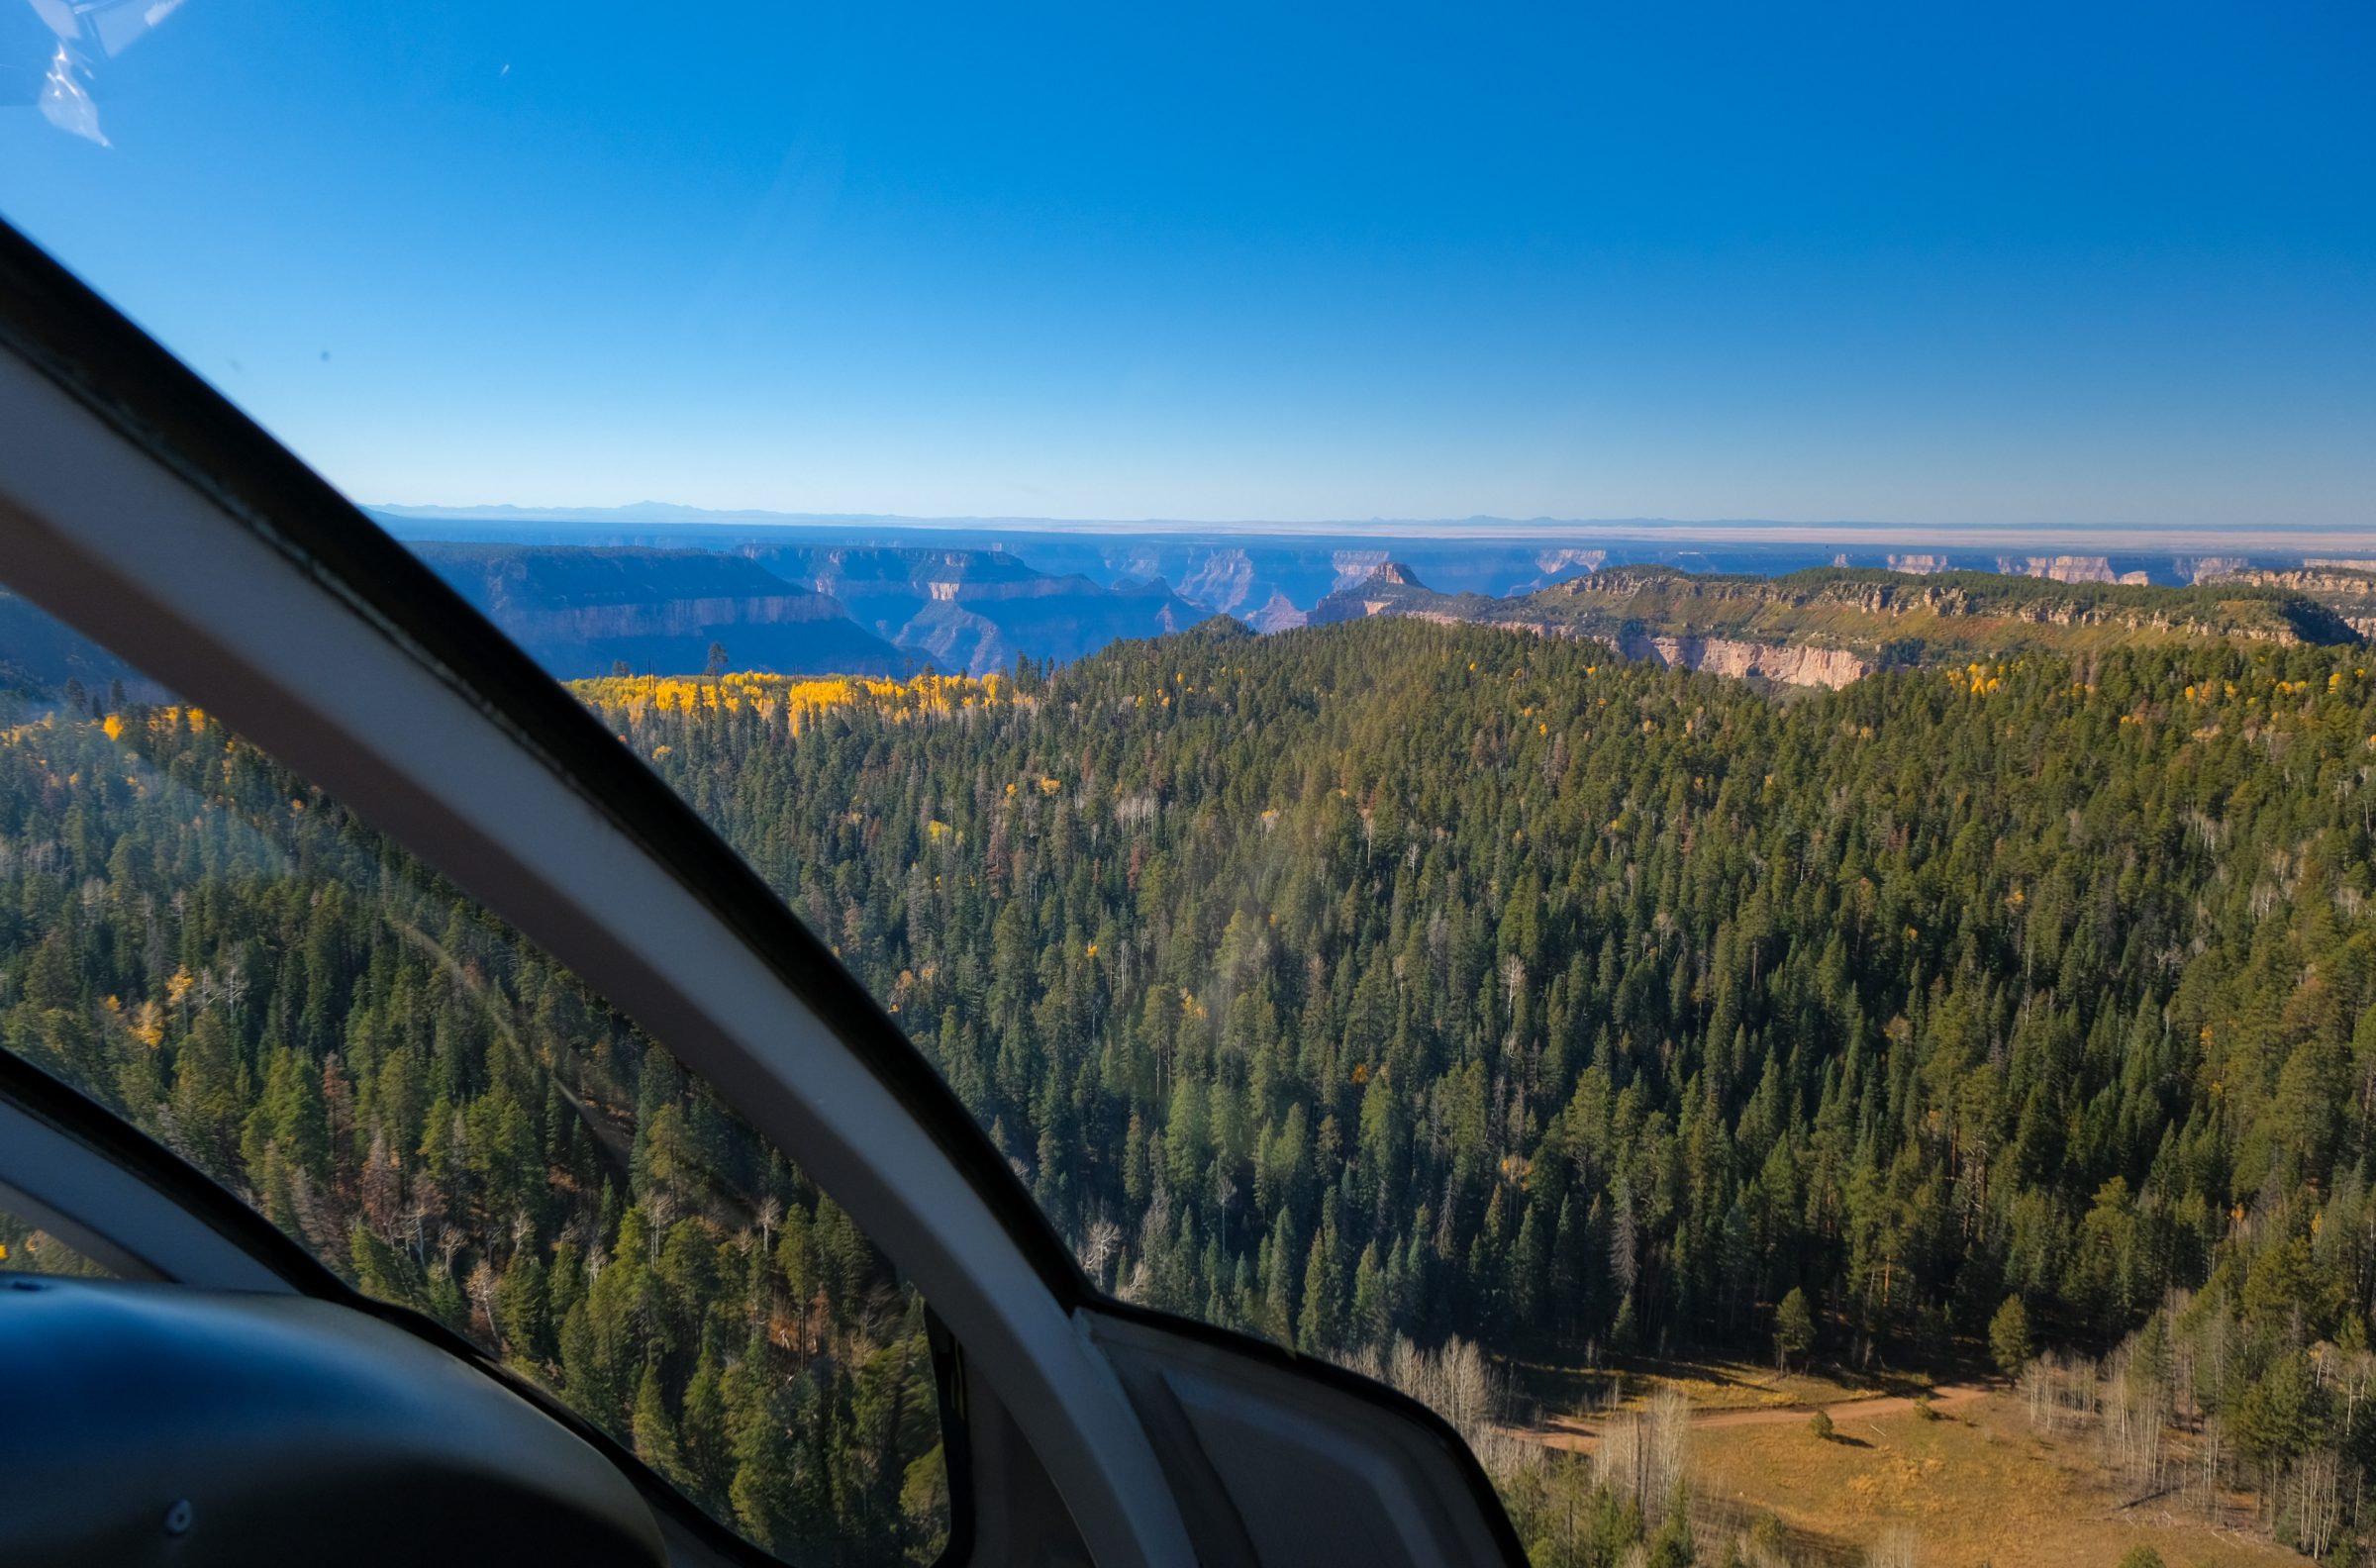 Let vrtulníkem Grand Canyon